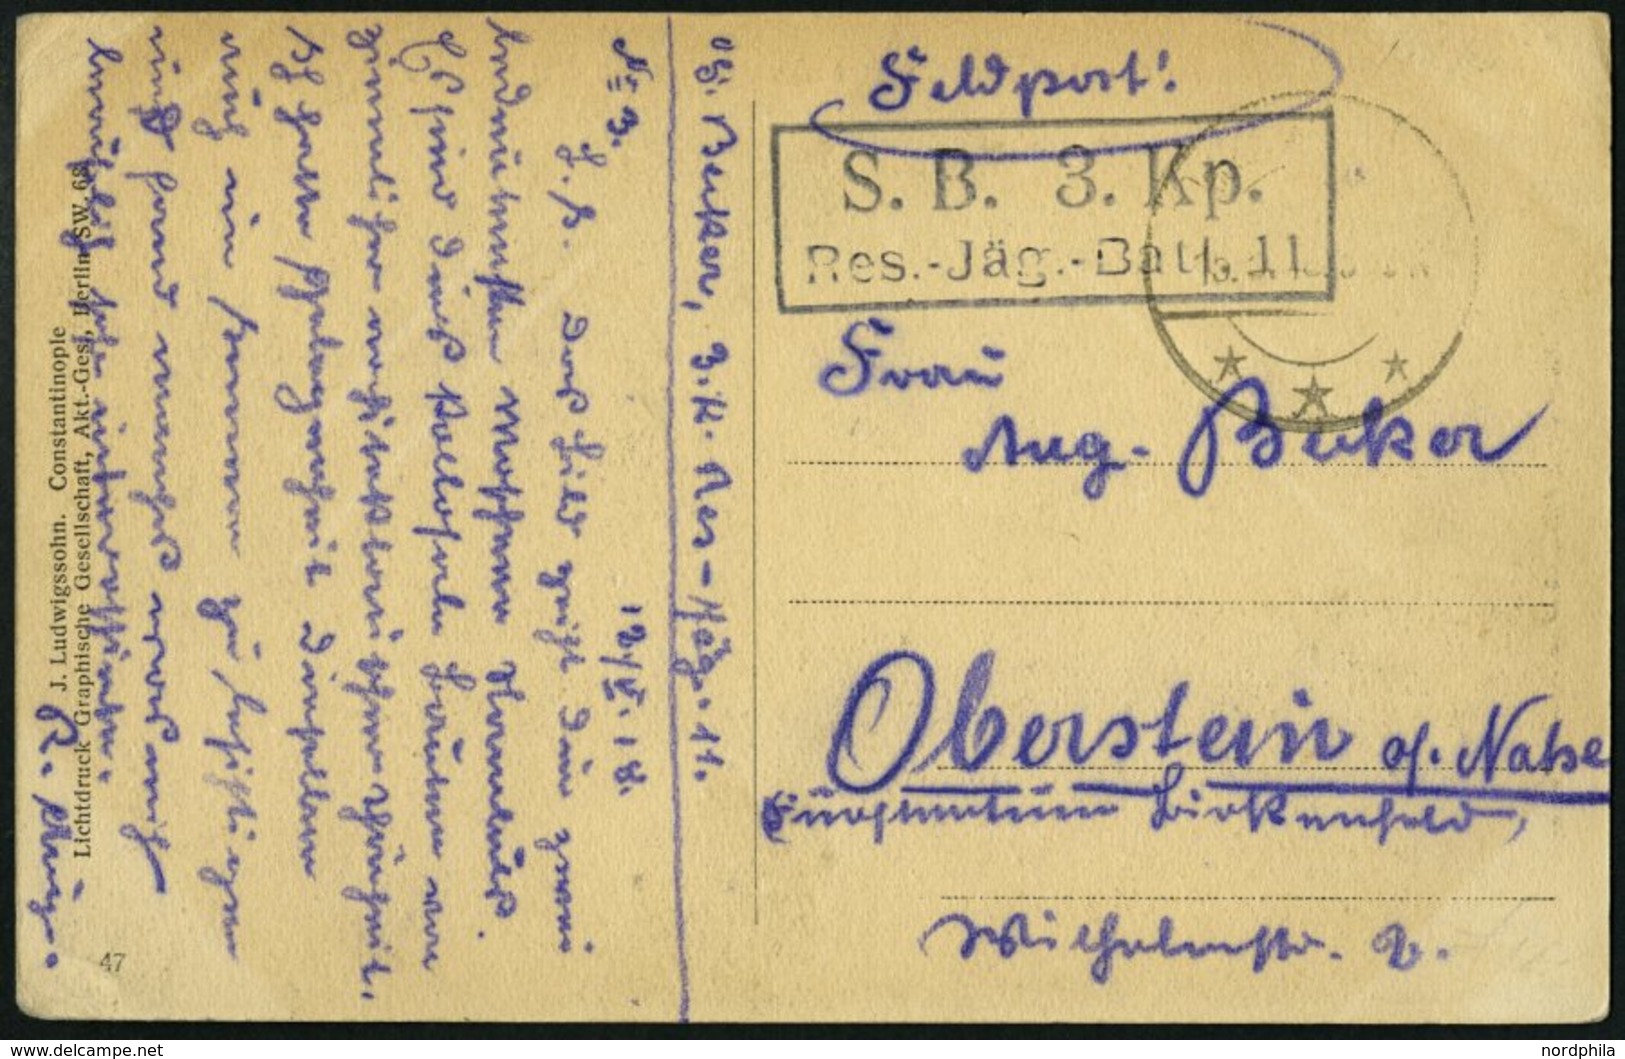 DP TÜRKEI 1918 Feldpoststation RAJAK Auf Feldpost-Ansichtskarte Der 3.Komp.Res.Jäg.Batt 11, Pracht - Turquia (oficinas)